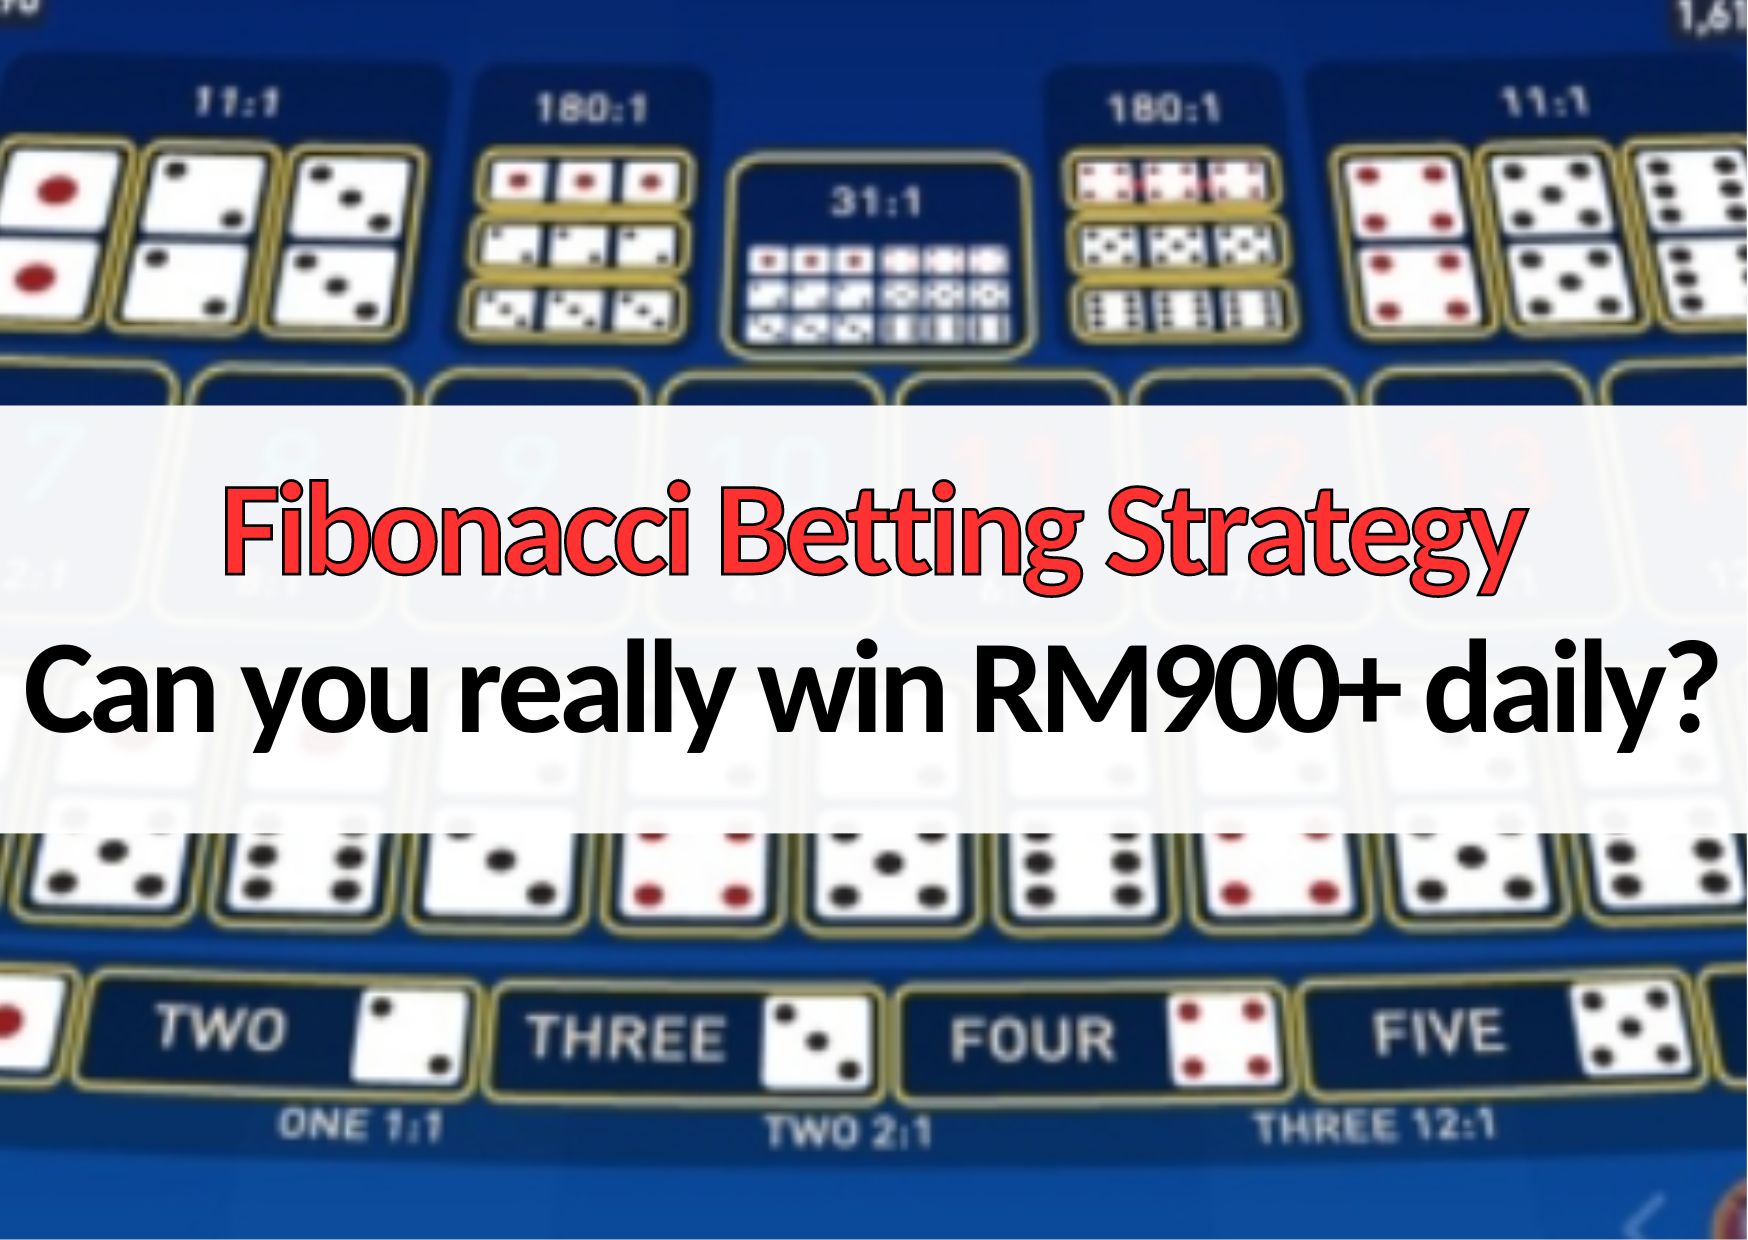 fibonacci betting strategy sequence trick win huge amount every day